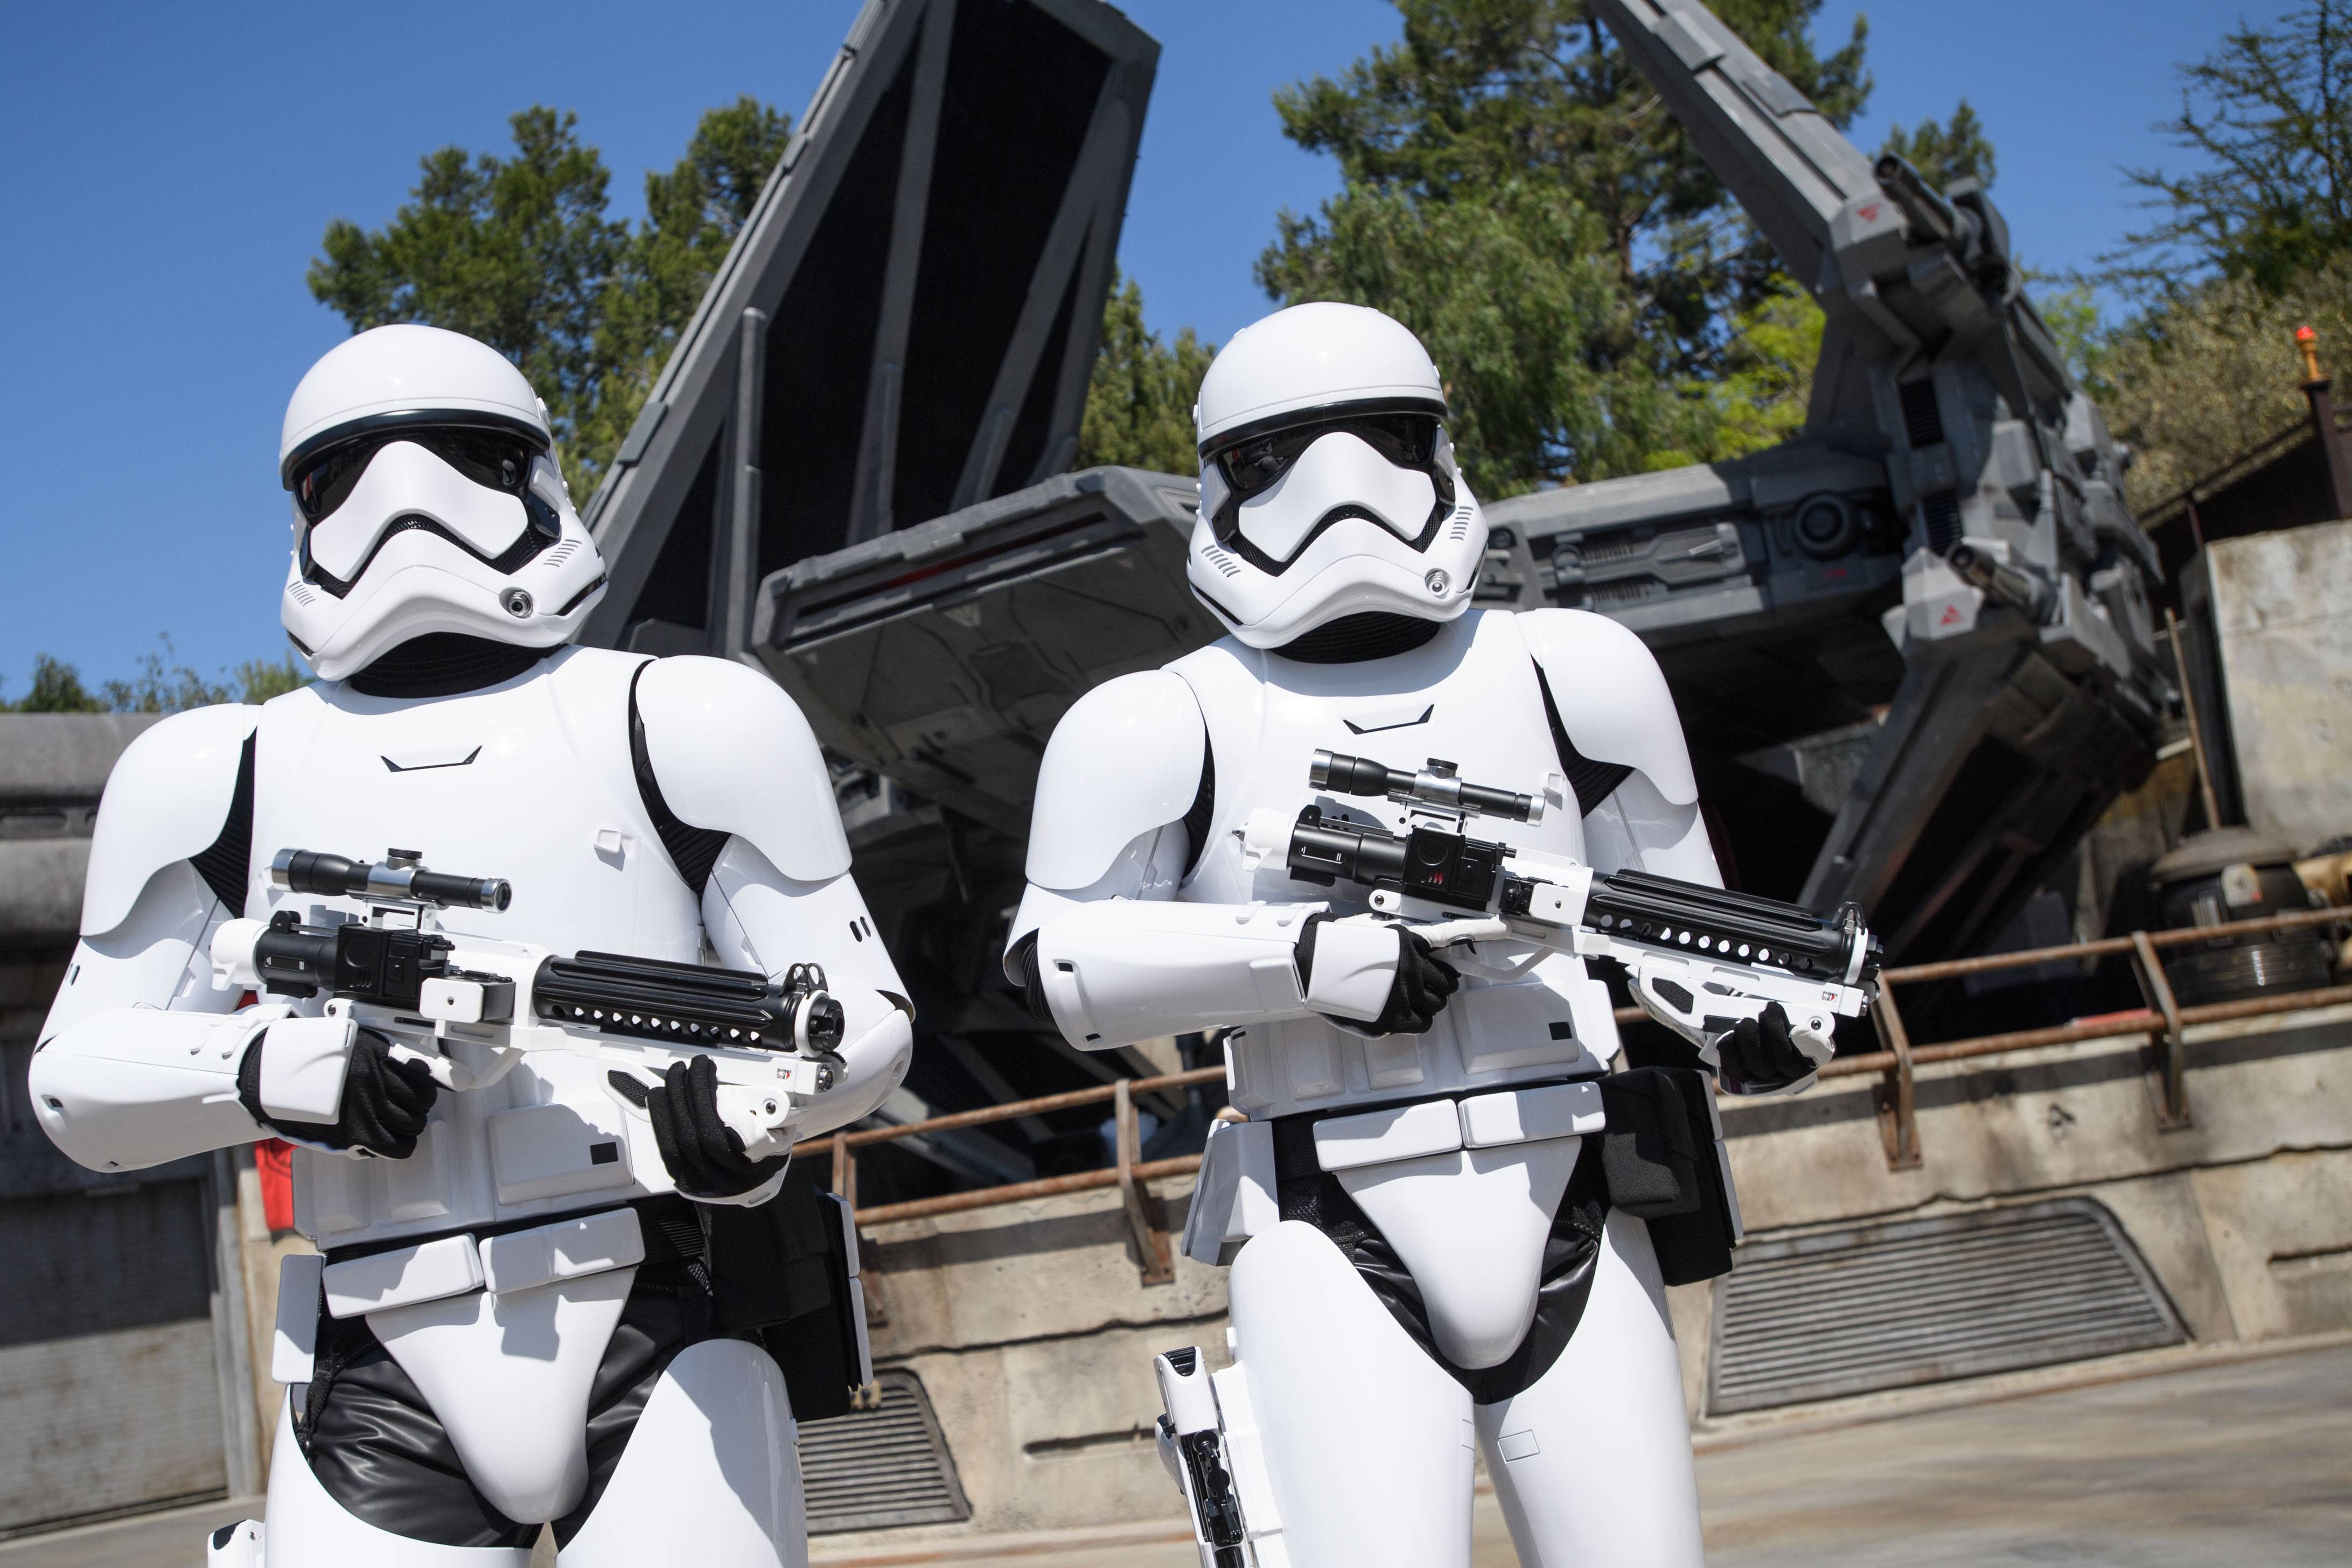 VIDEO - Star Wars Galaxy's Edge dedication ceremony live from Disney's Hollywood Studios